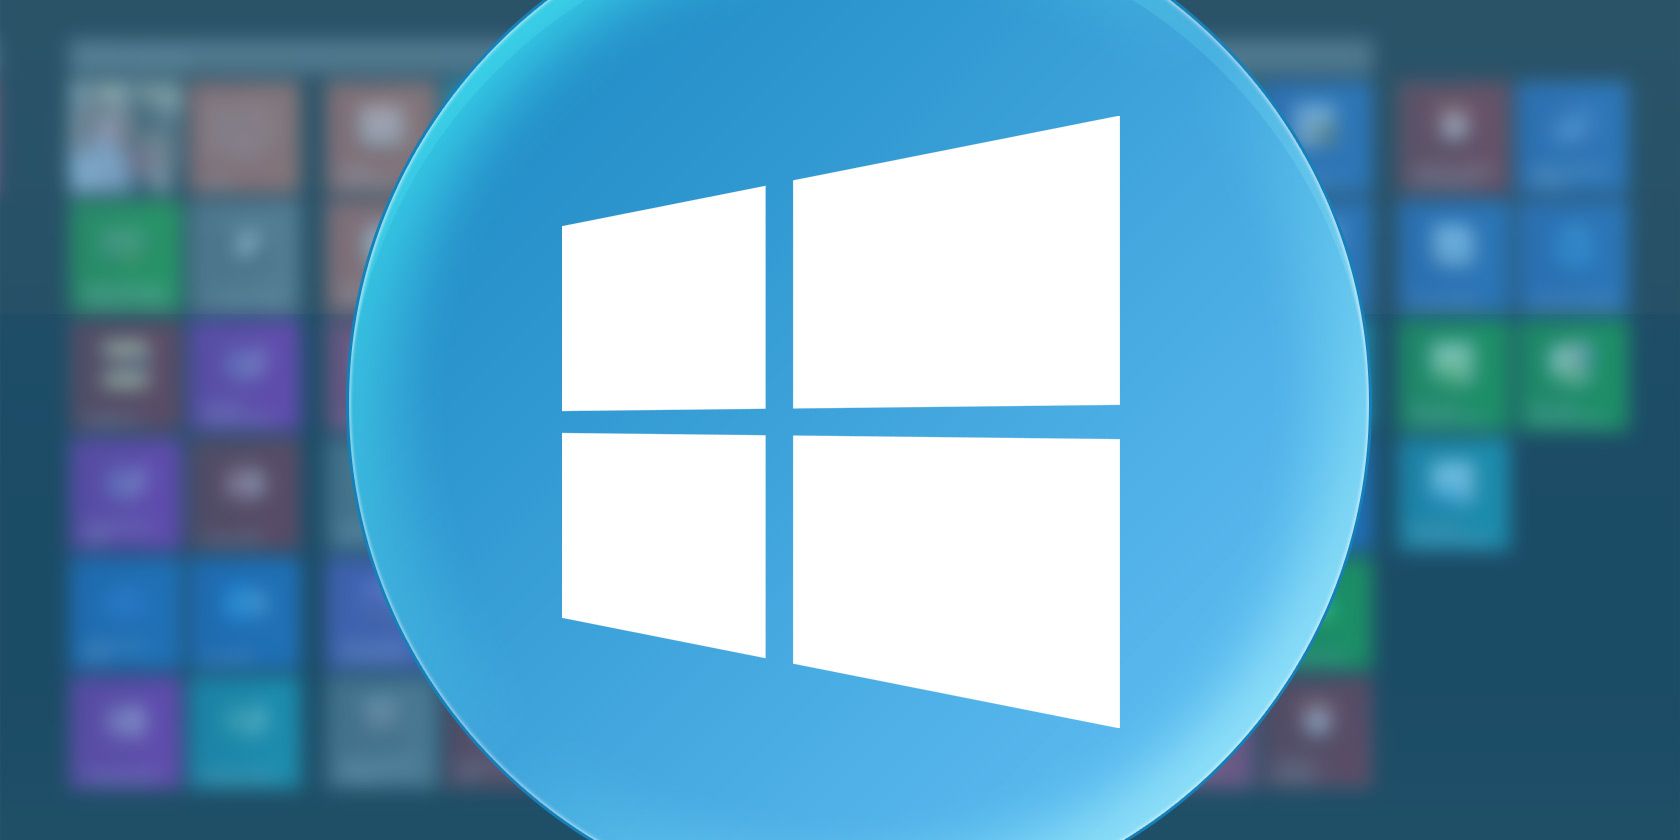 Your windows build. Windows logo 2021.